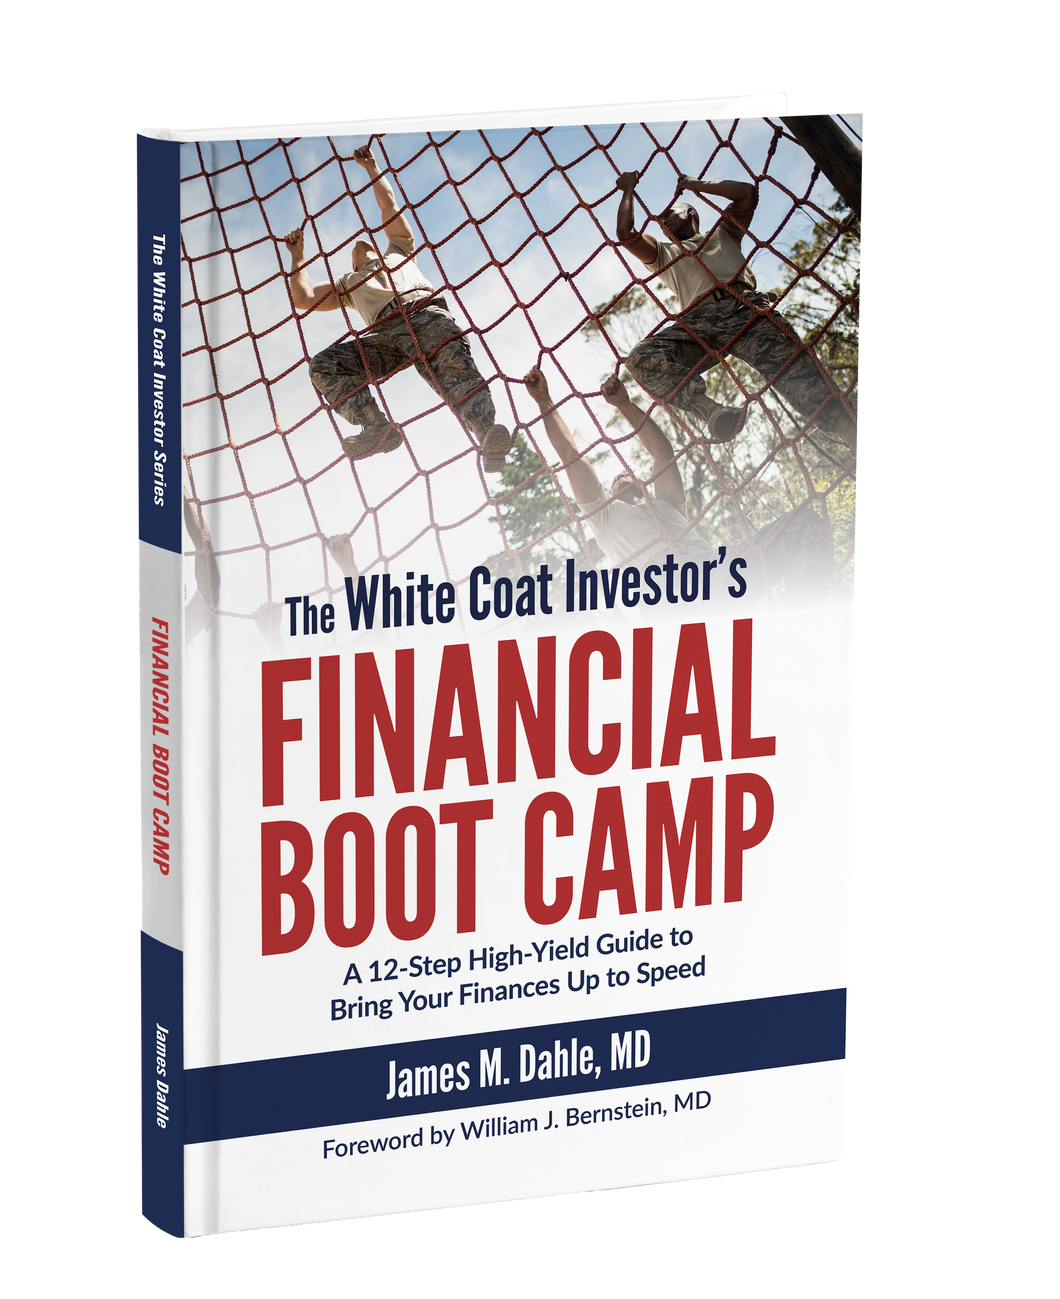 Book: Financial Boot Camp